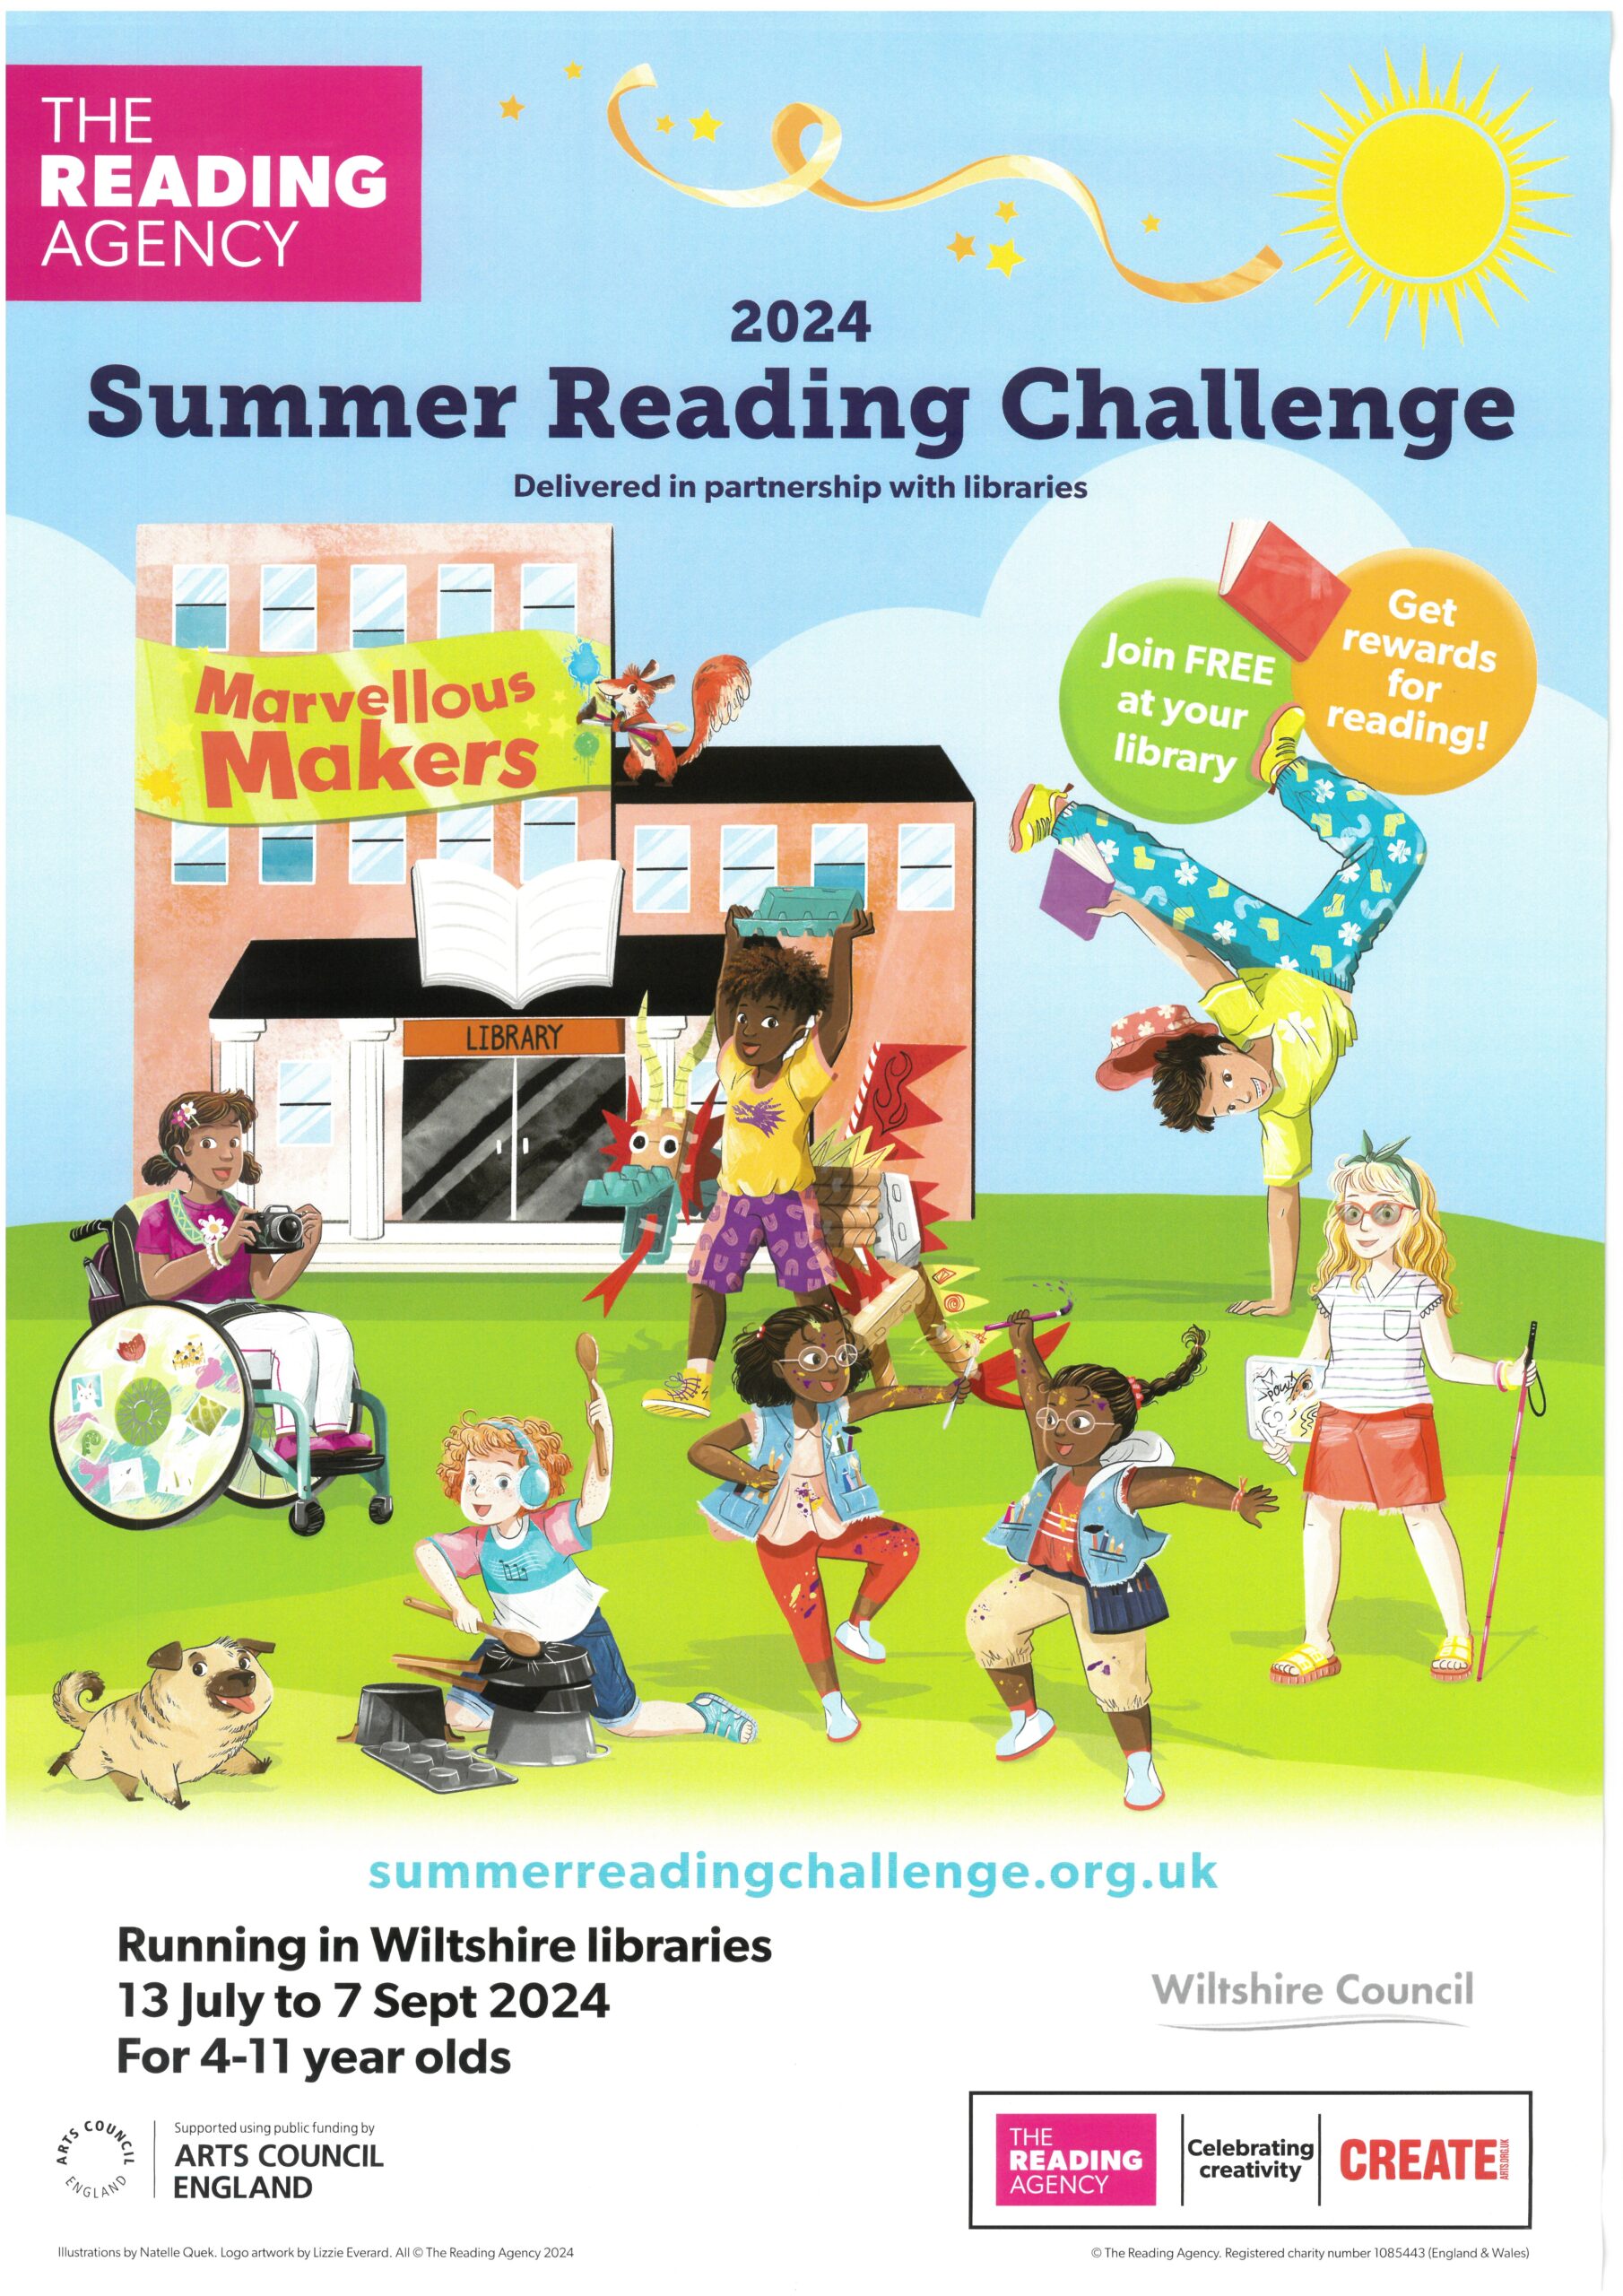 Summer reading challenge